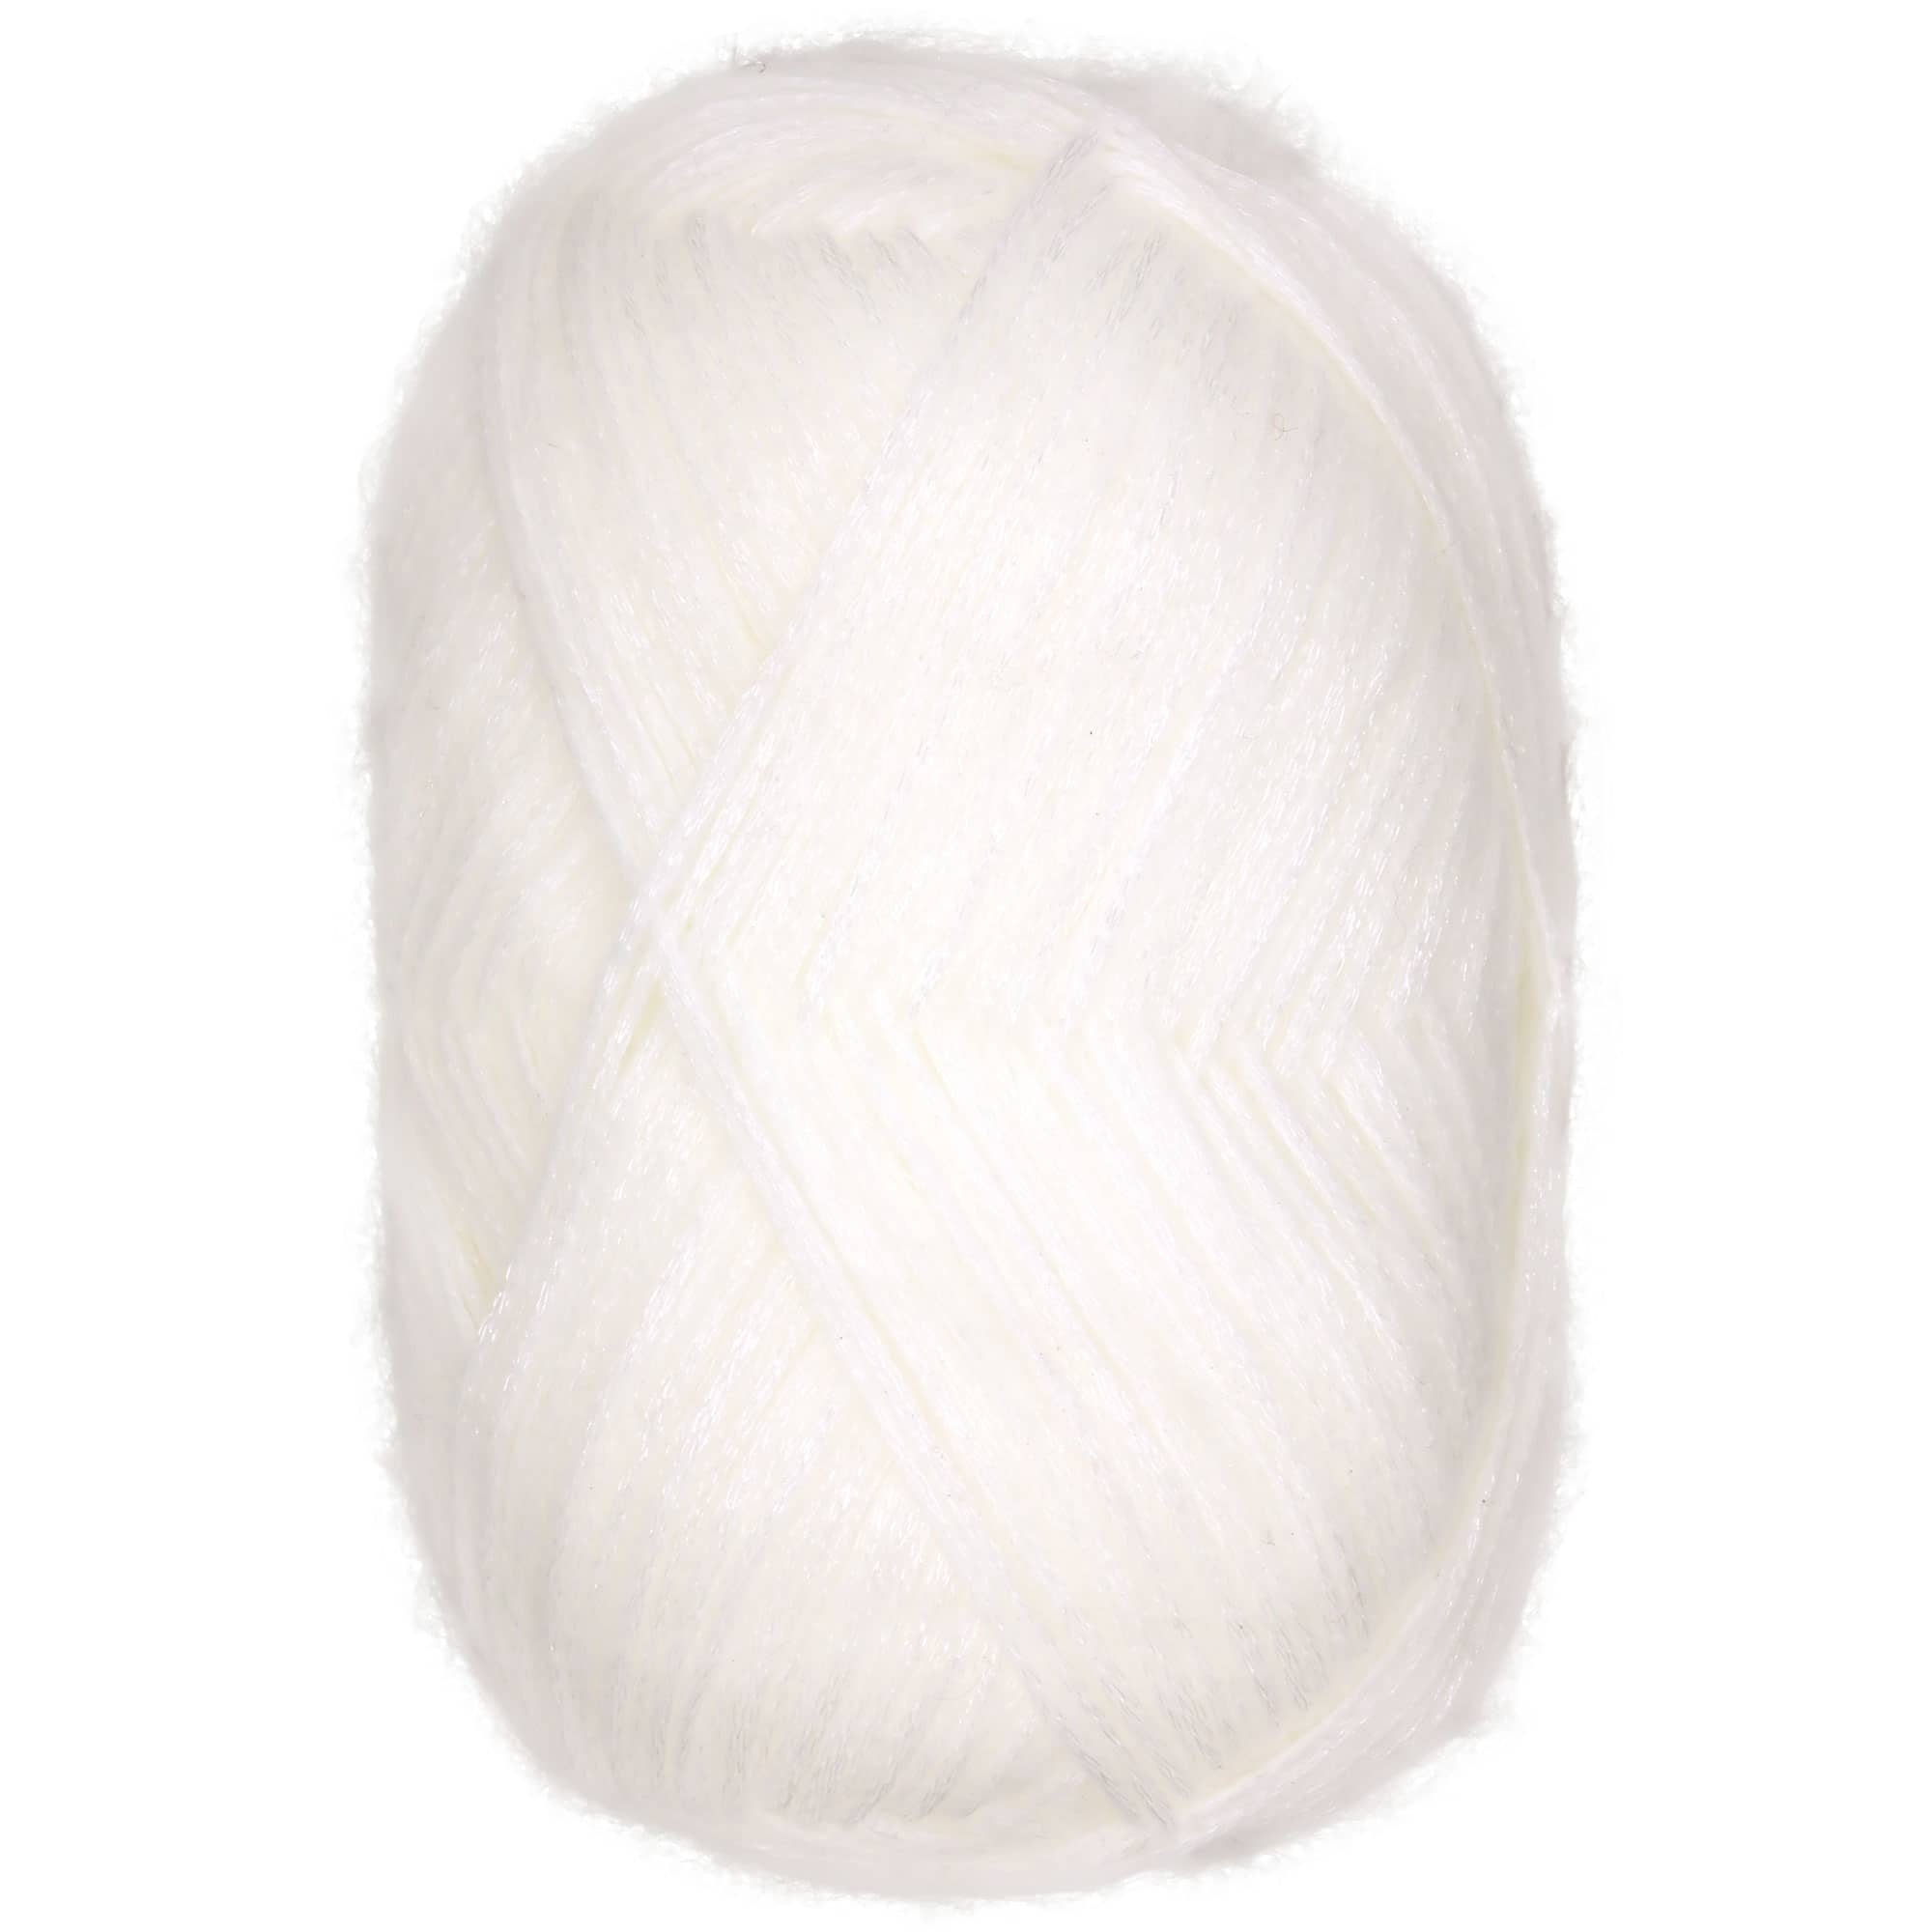 JubileeYarn Undyed Wool and Nylon Blend Yarn - Light Worsted (DK